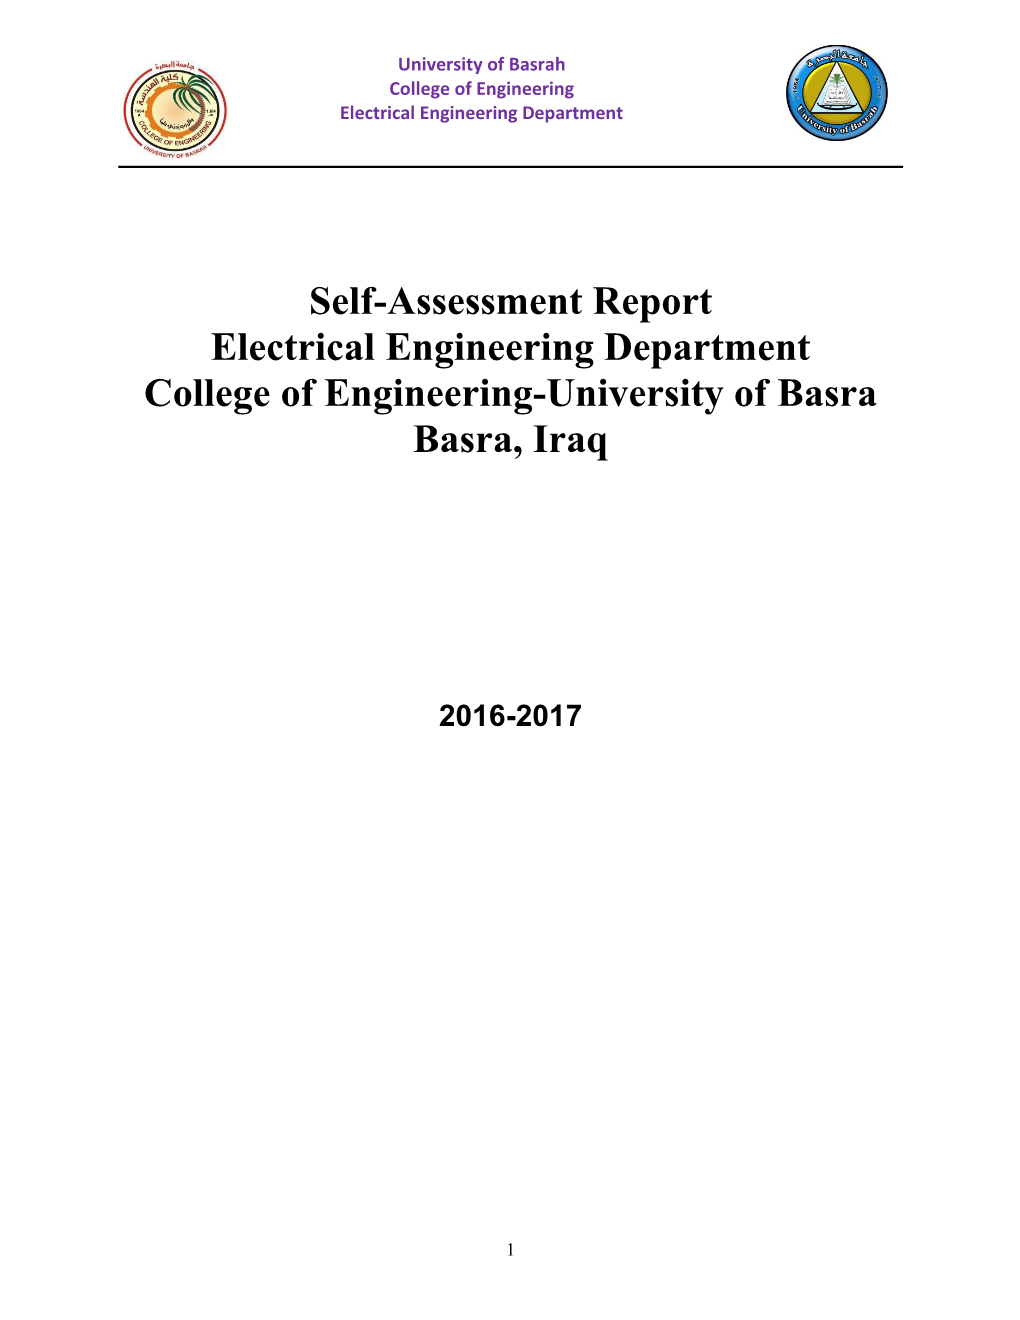 Self-Assessment Report Electrical Engineering Department College of Engineering-University of Basra Basra, Iraq